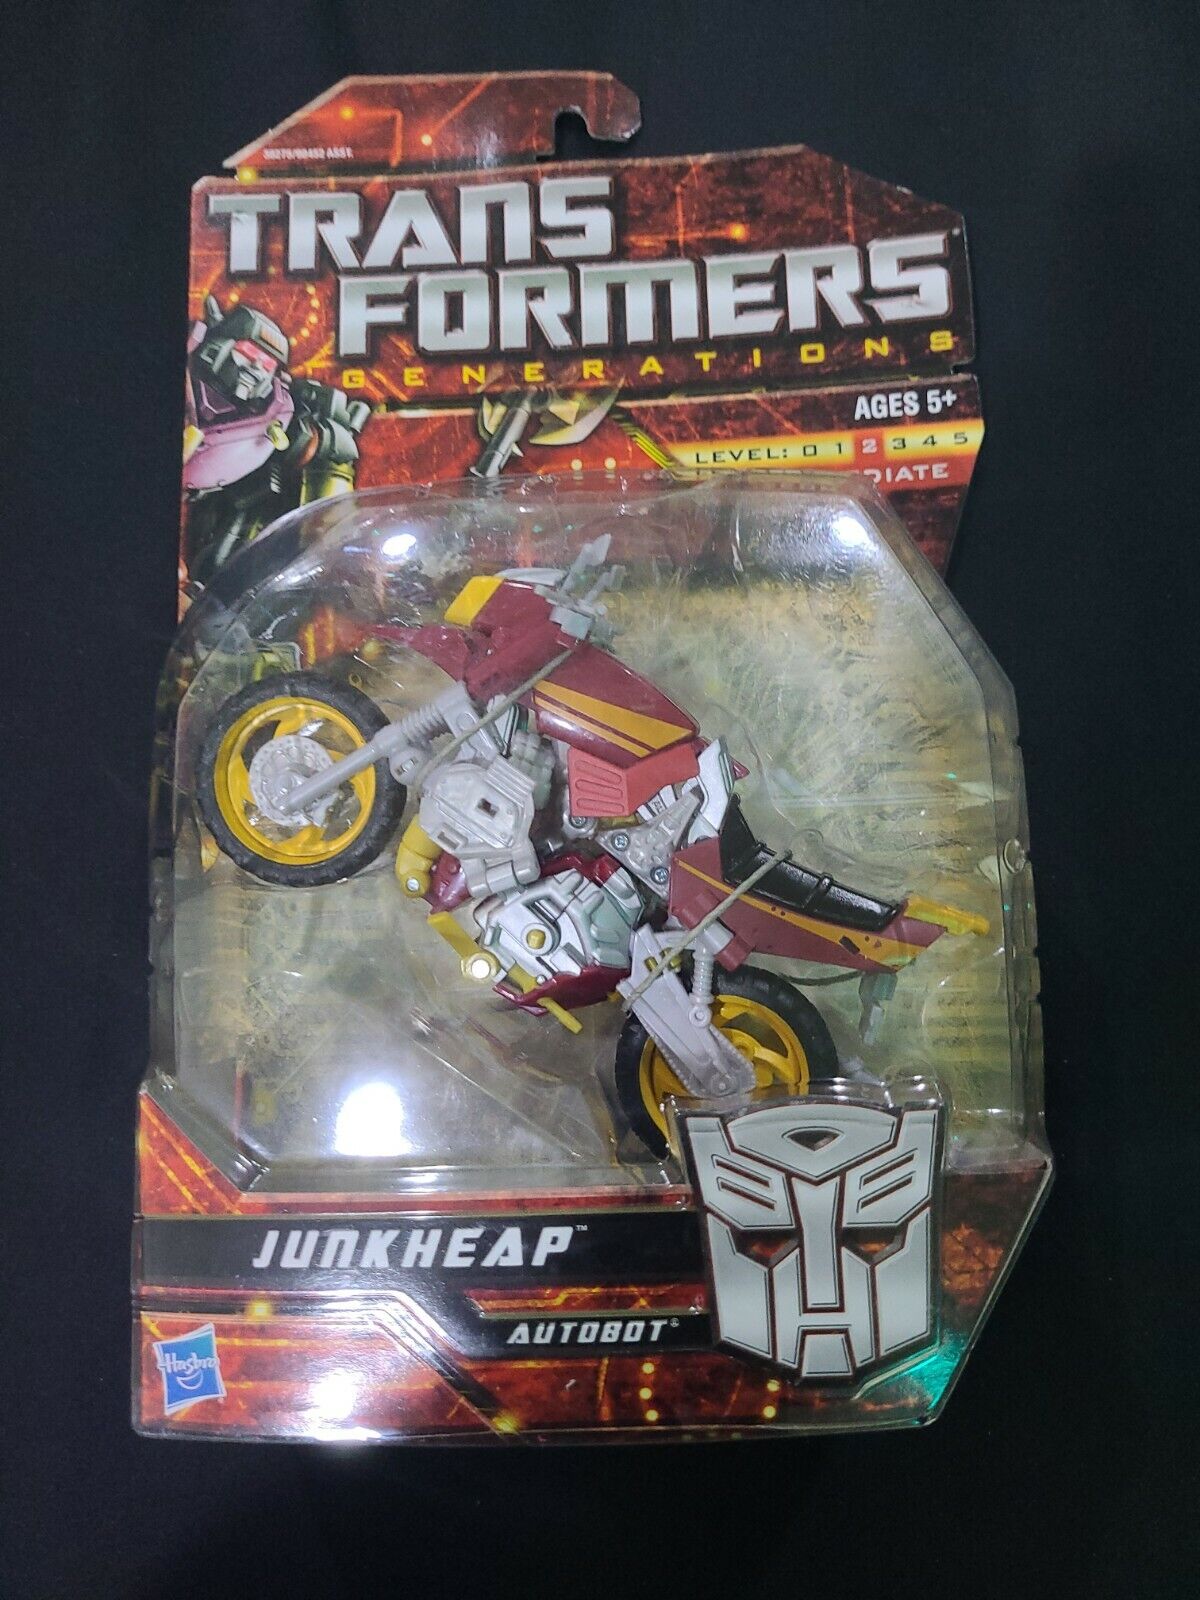 Transformers Generations Junkheap Autobot Action Figure 2011 Hasbro #38275/98452